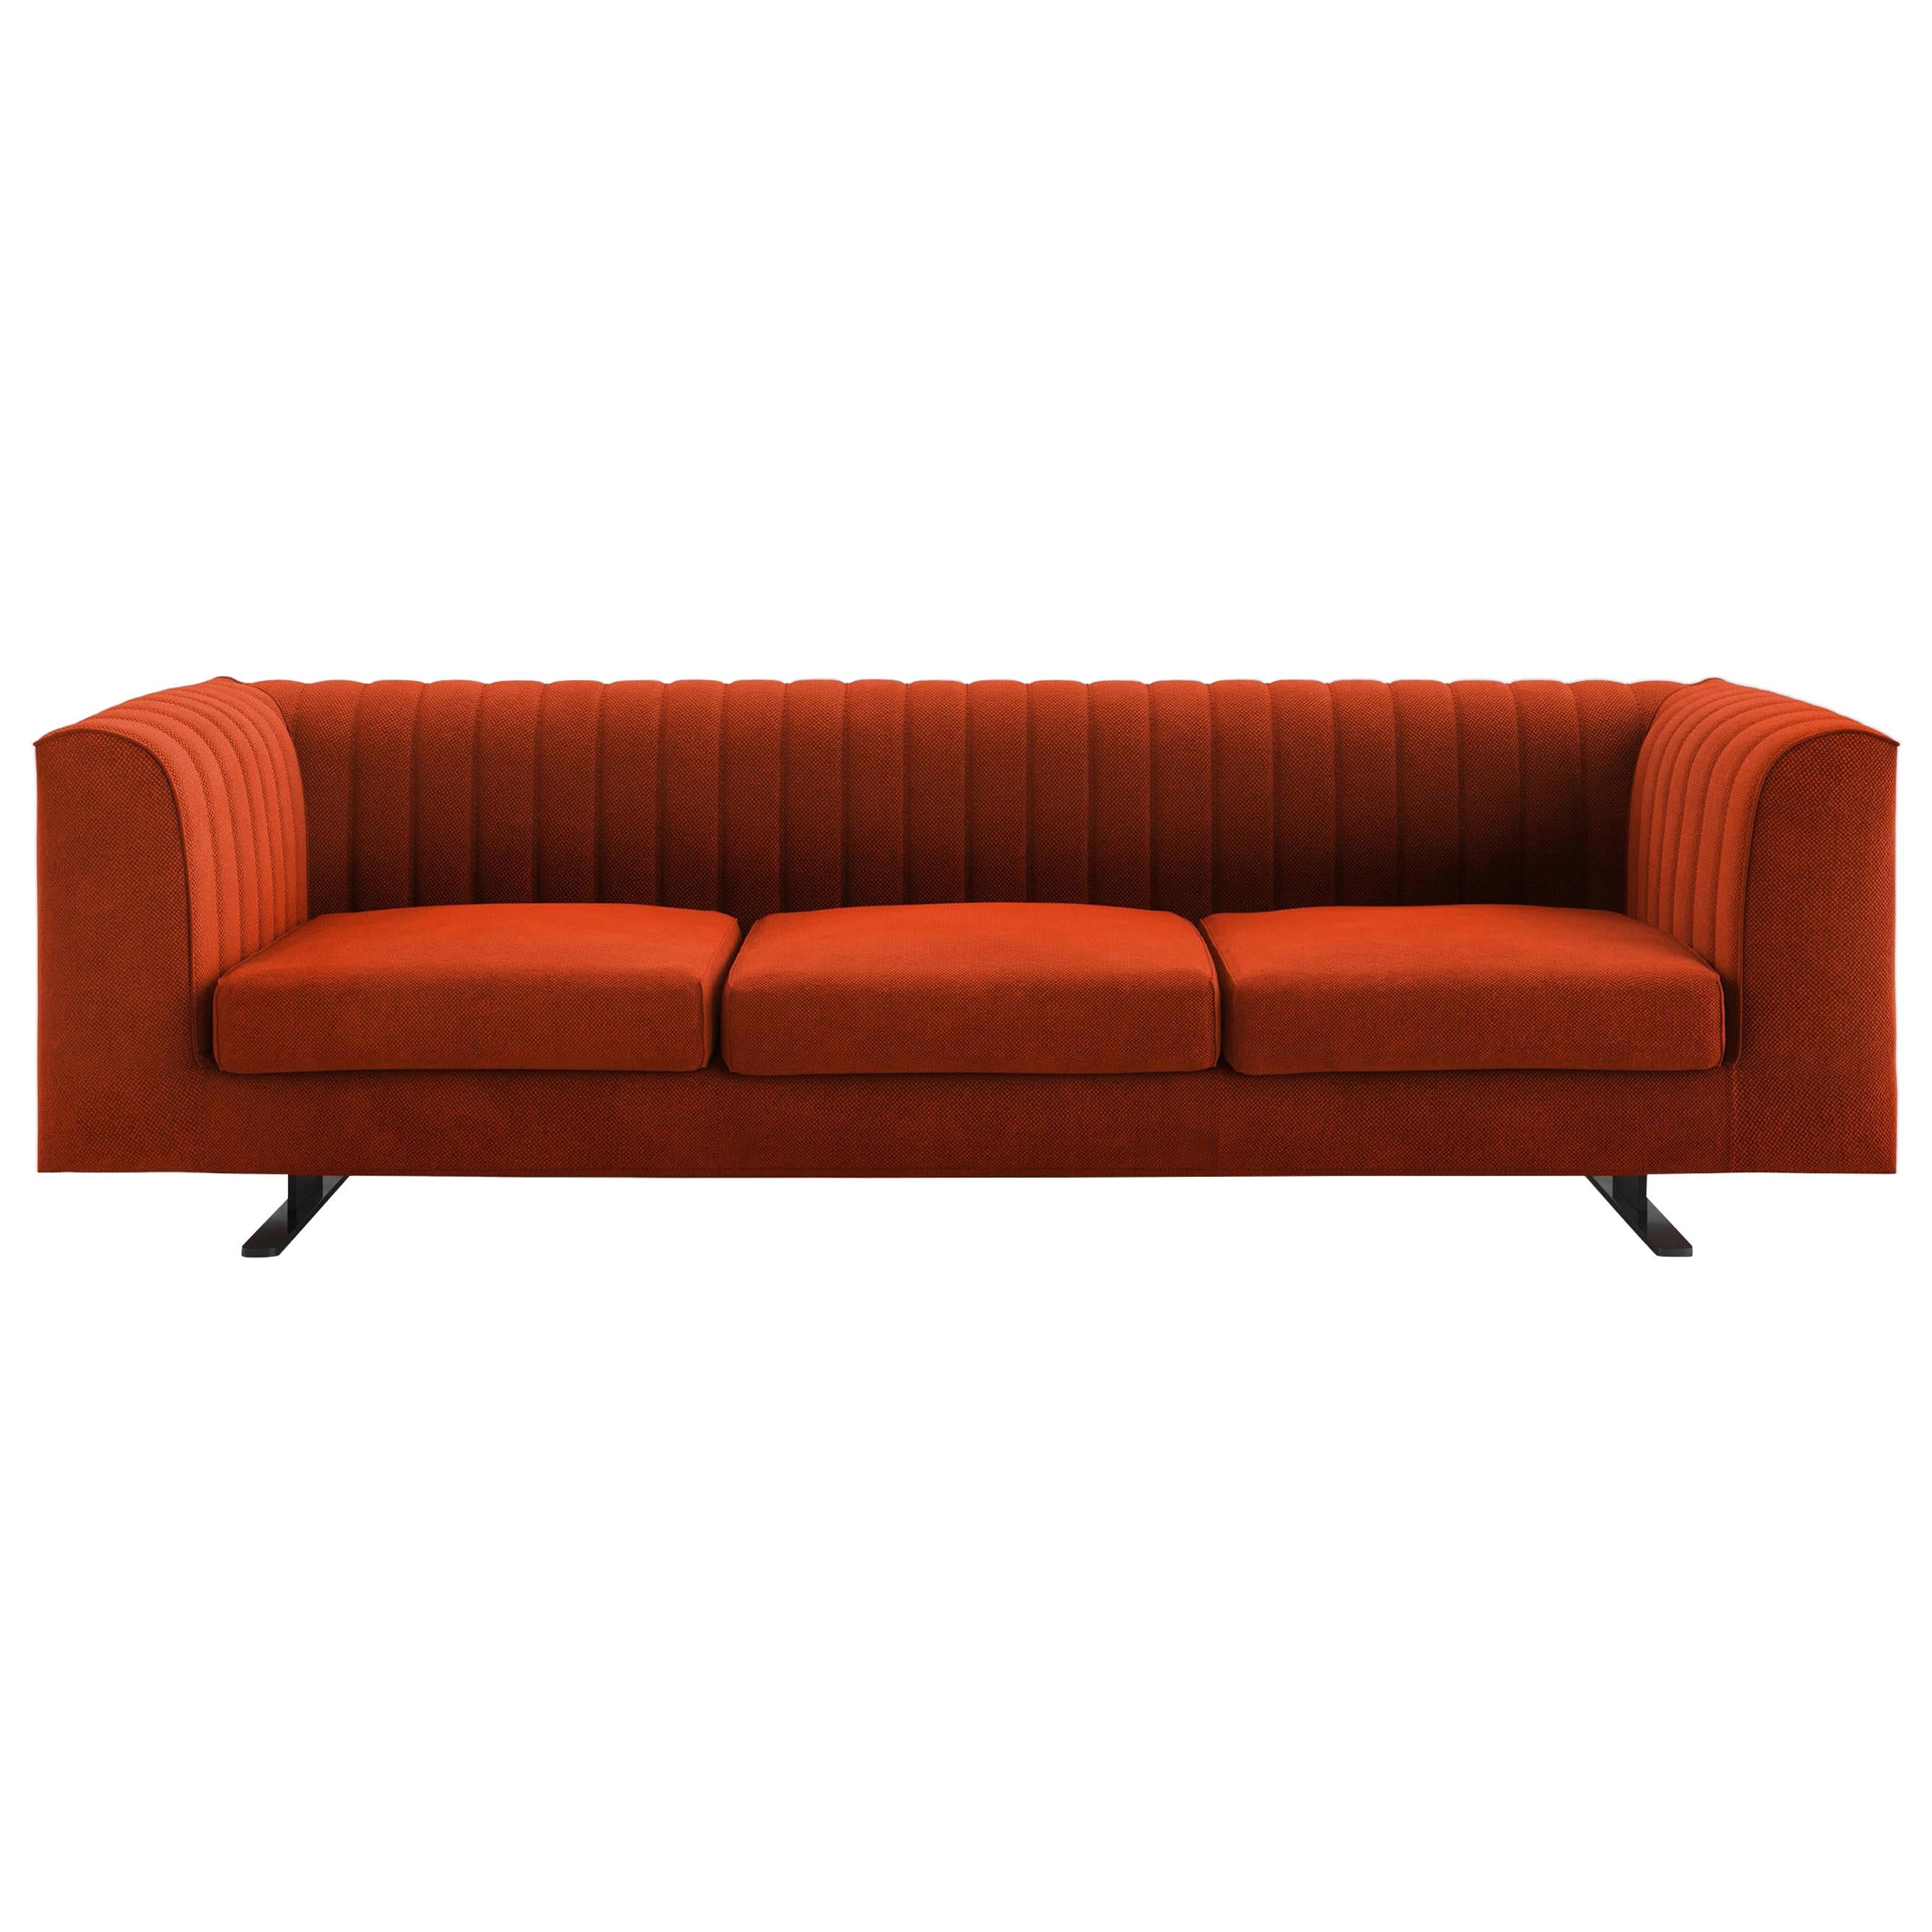 Customizable Tacchini Quilt Elegant Sofa designed by Pearson Lloyd For Sale